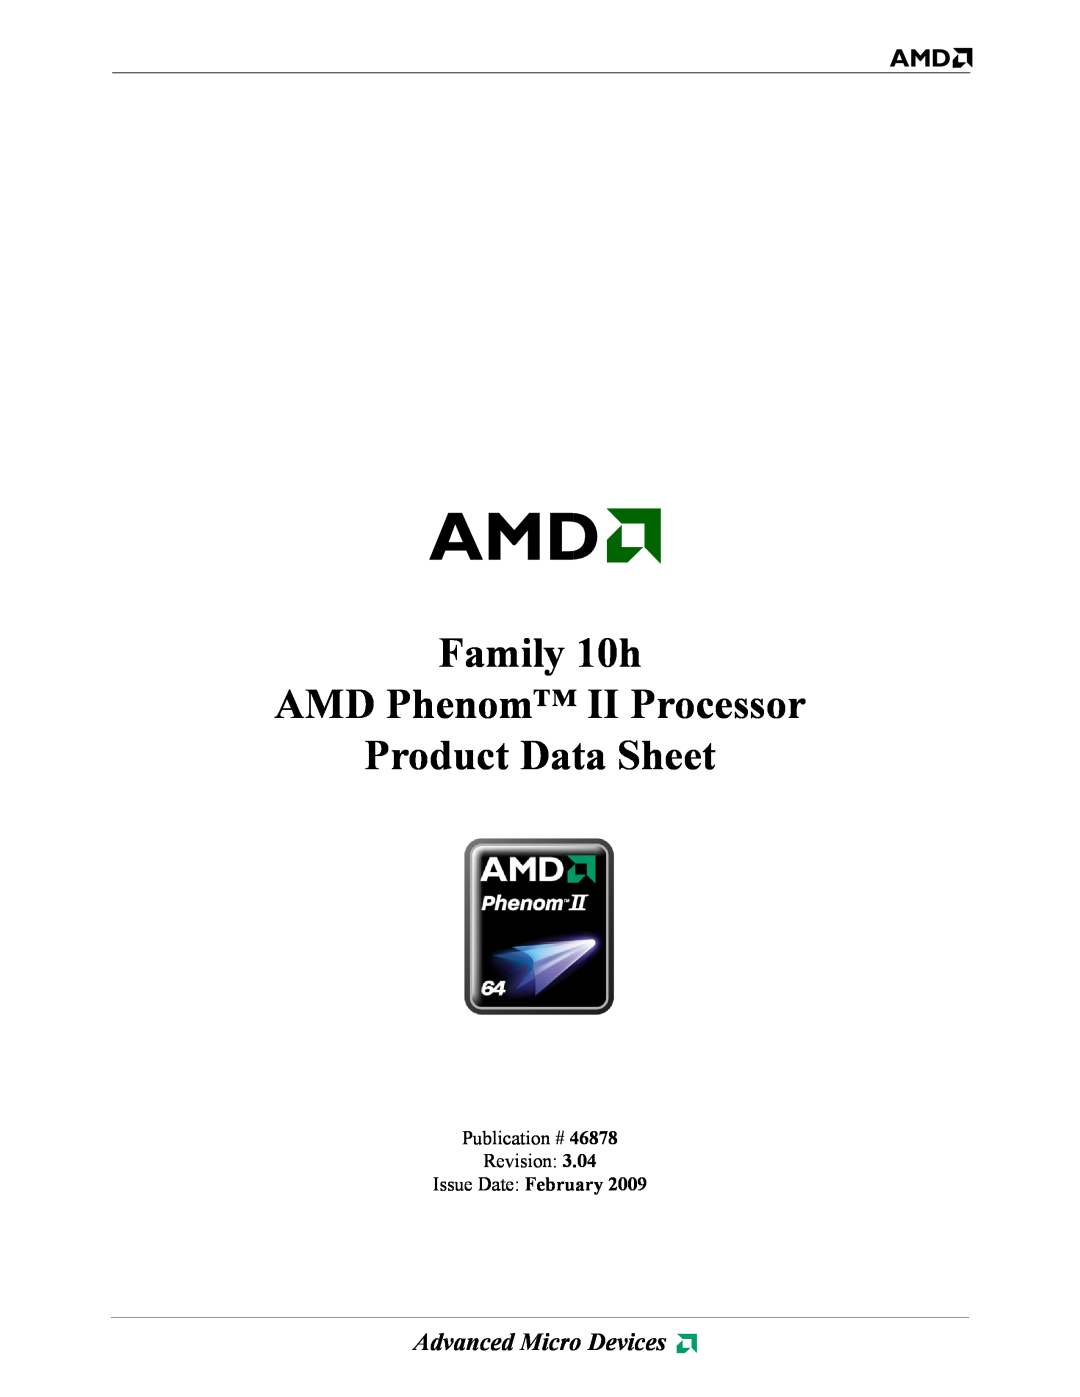 AMD manual Family 10h AMD Phenom II Processor Product Data Sheet, Advanced Micro Devices 